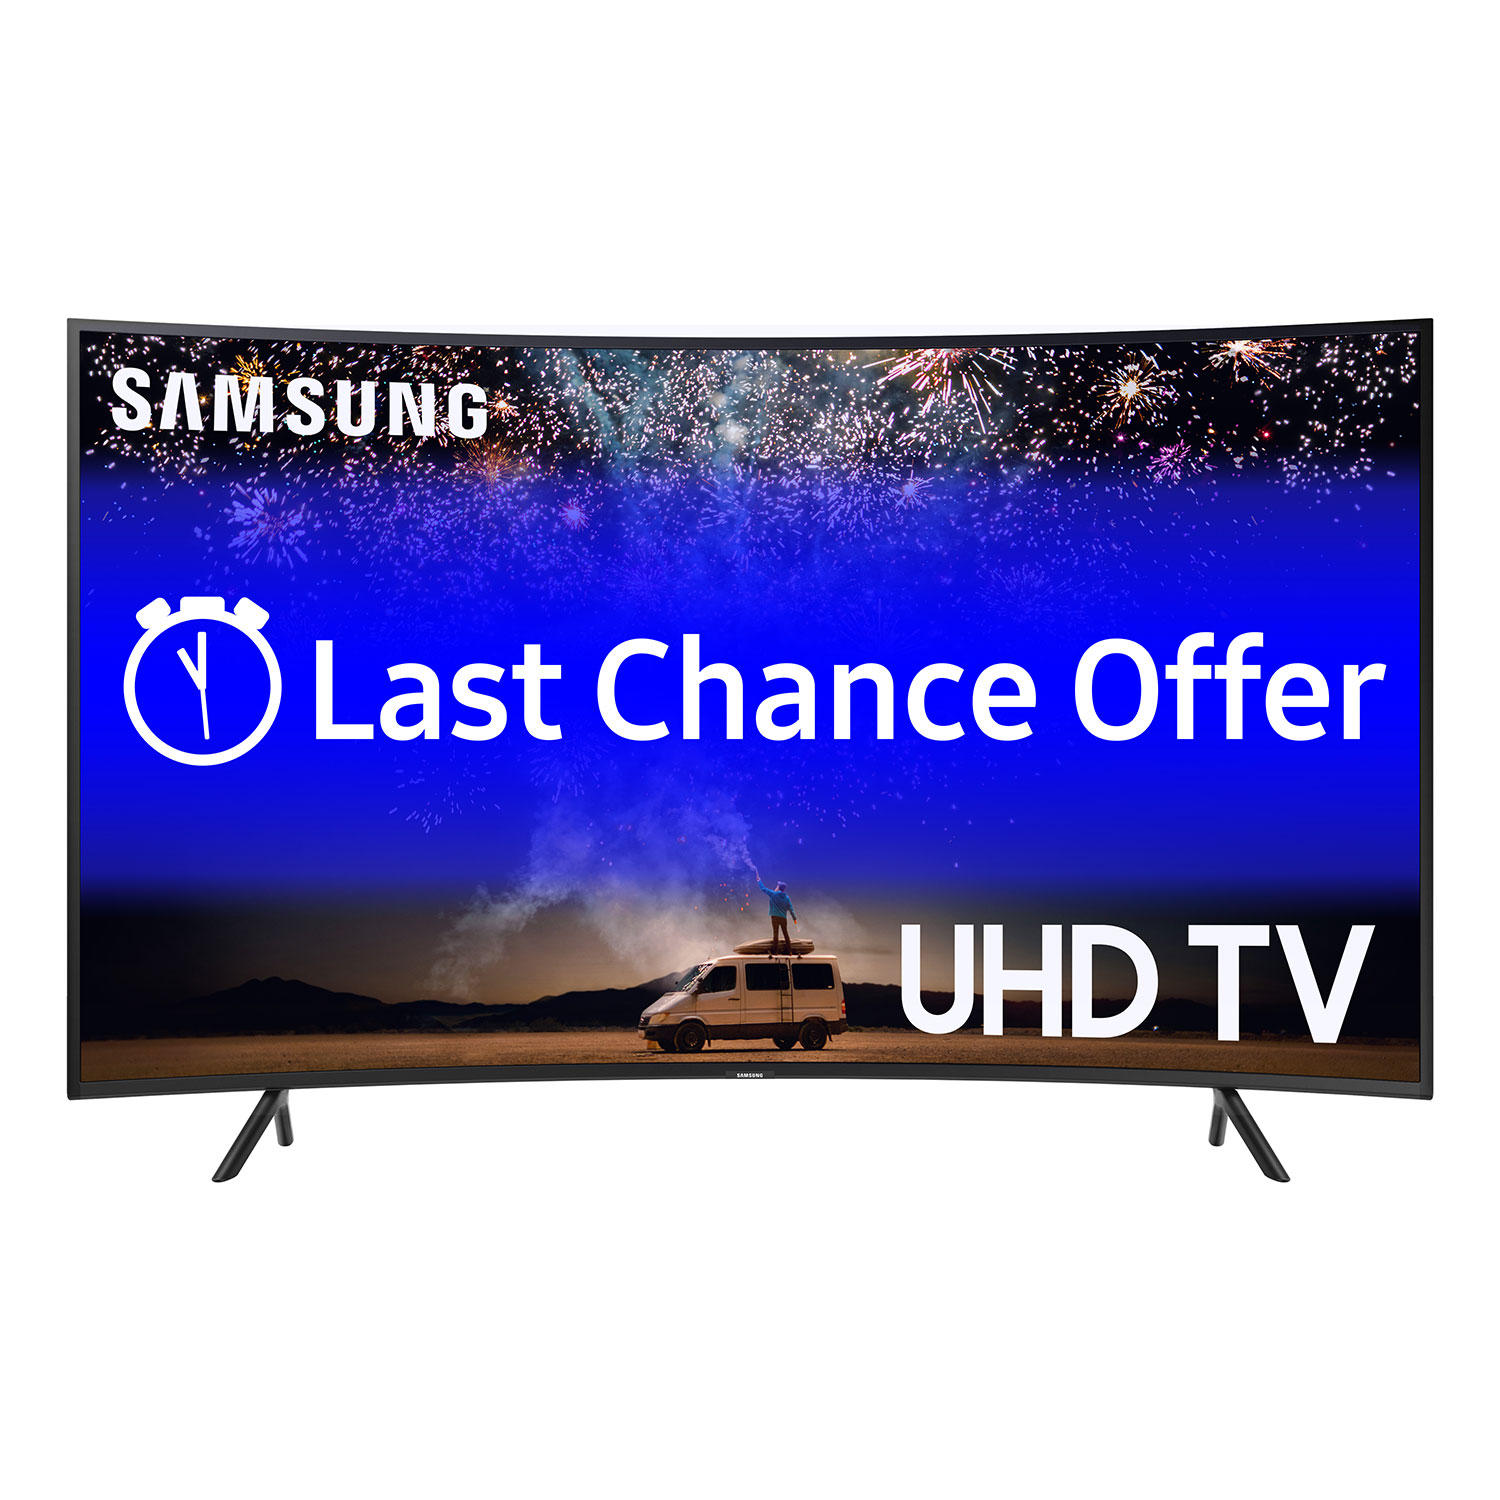 SAMSUNG UN55RU7300 55″ 4K Ultra HD (2160P) HDR Smart LED TV